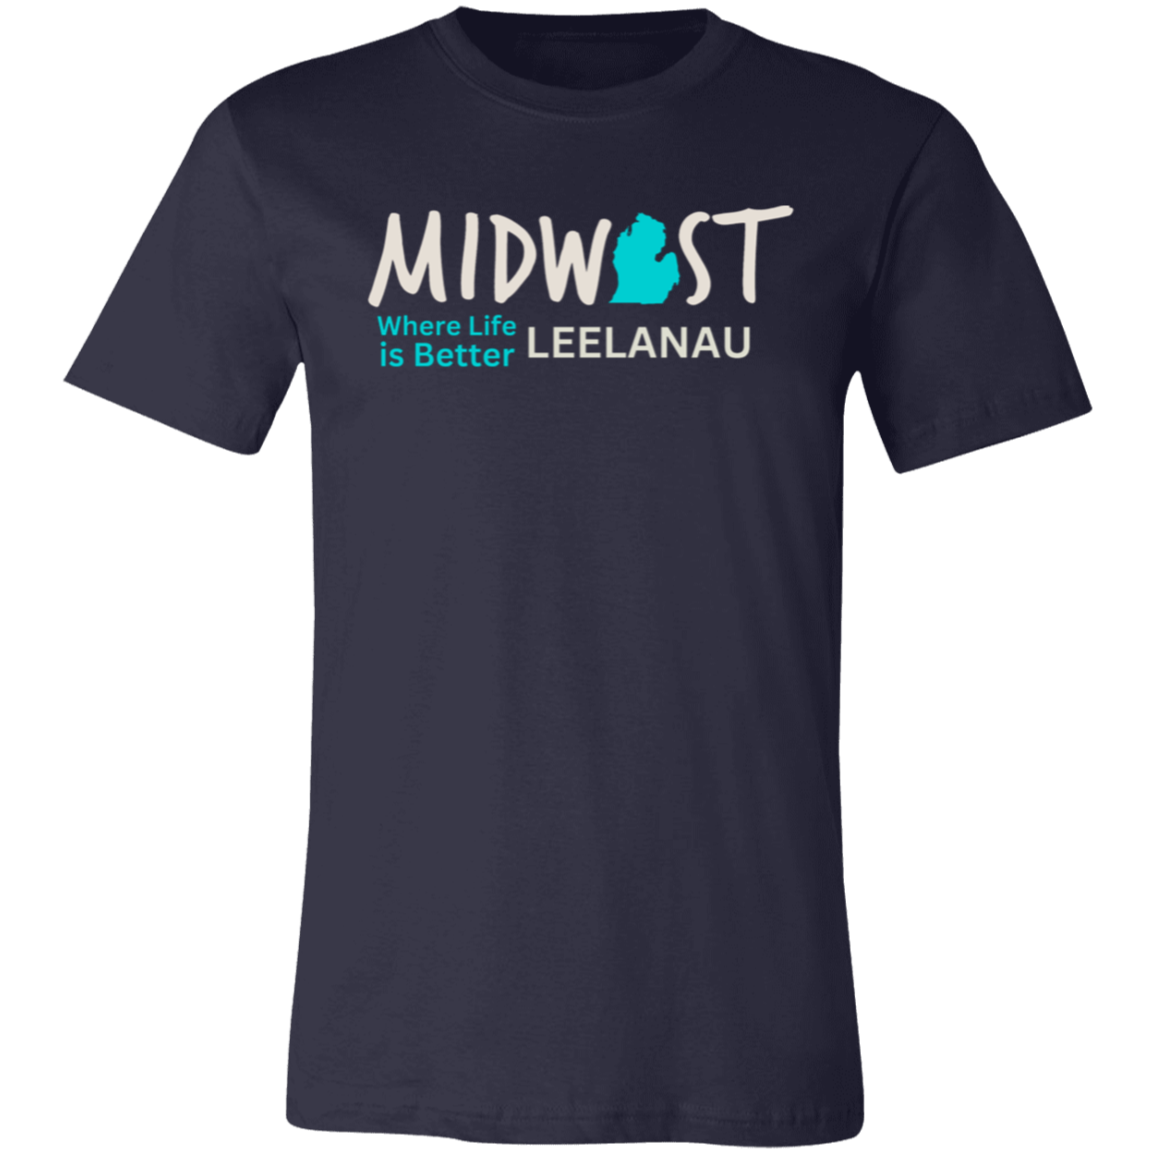 Midwest Where Life is Better Leelanau Unisex Jersey Tee